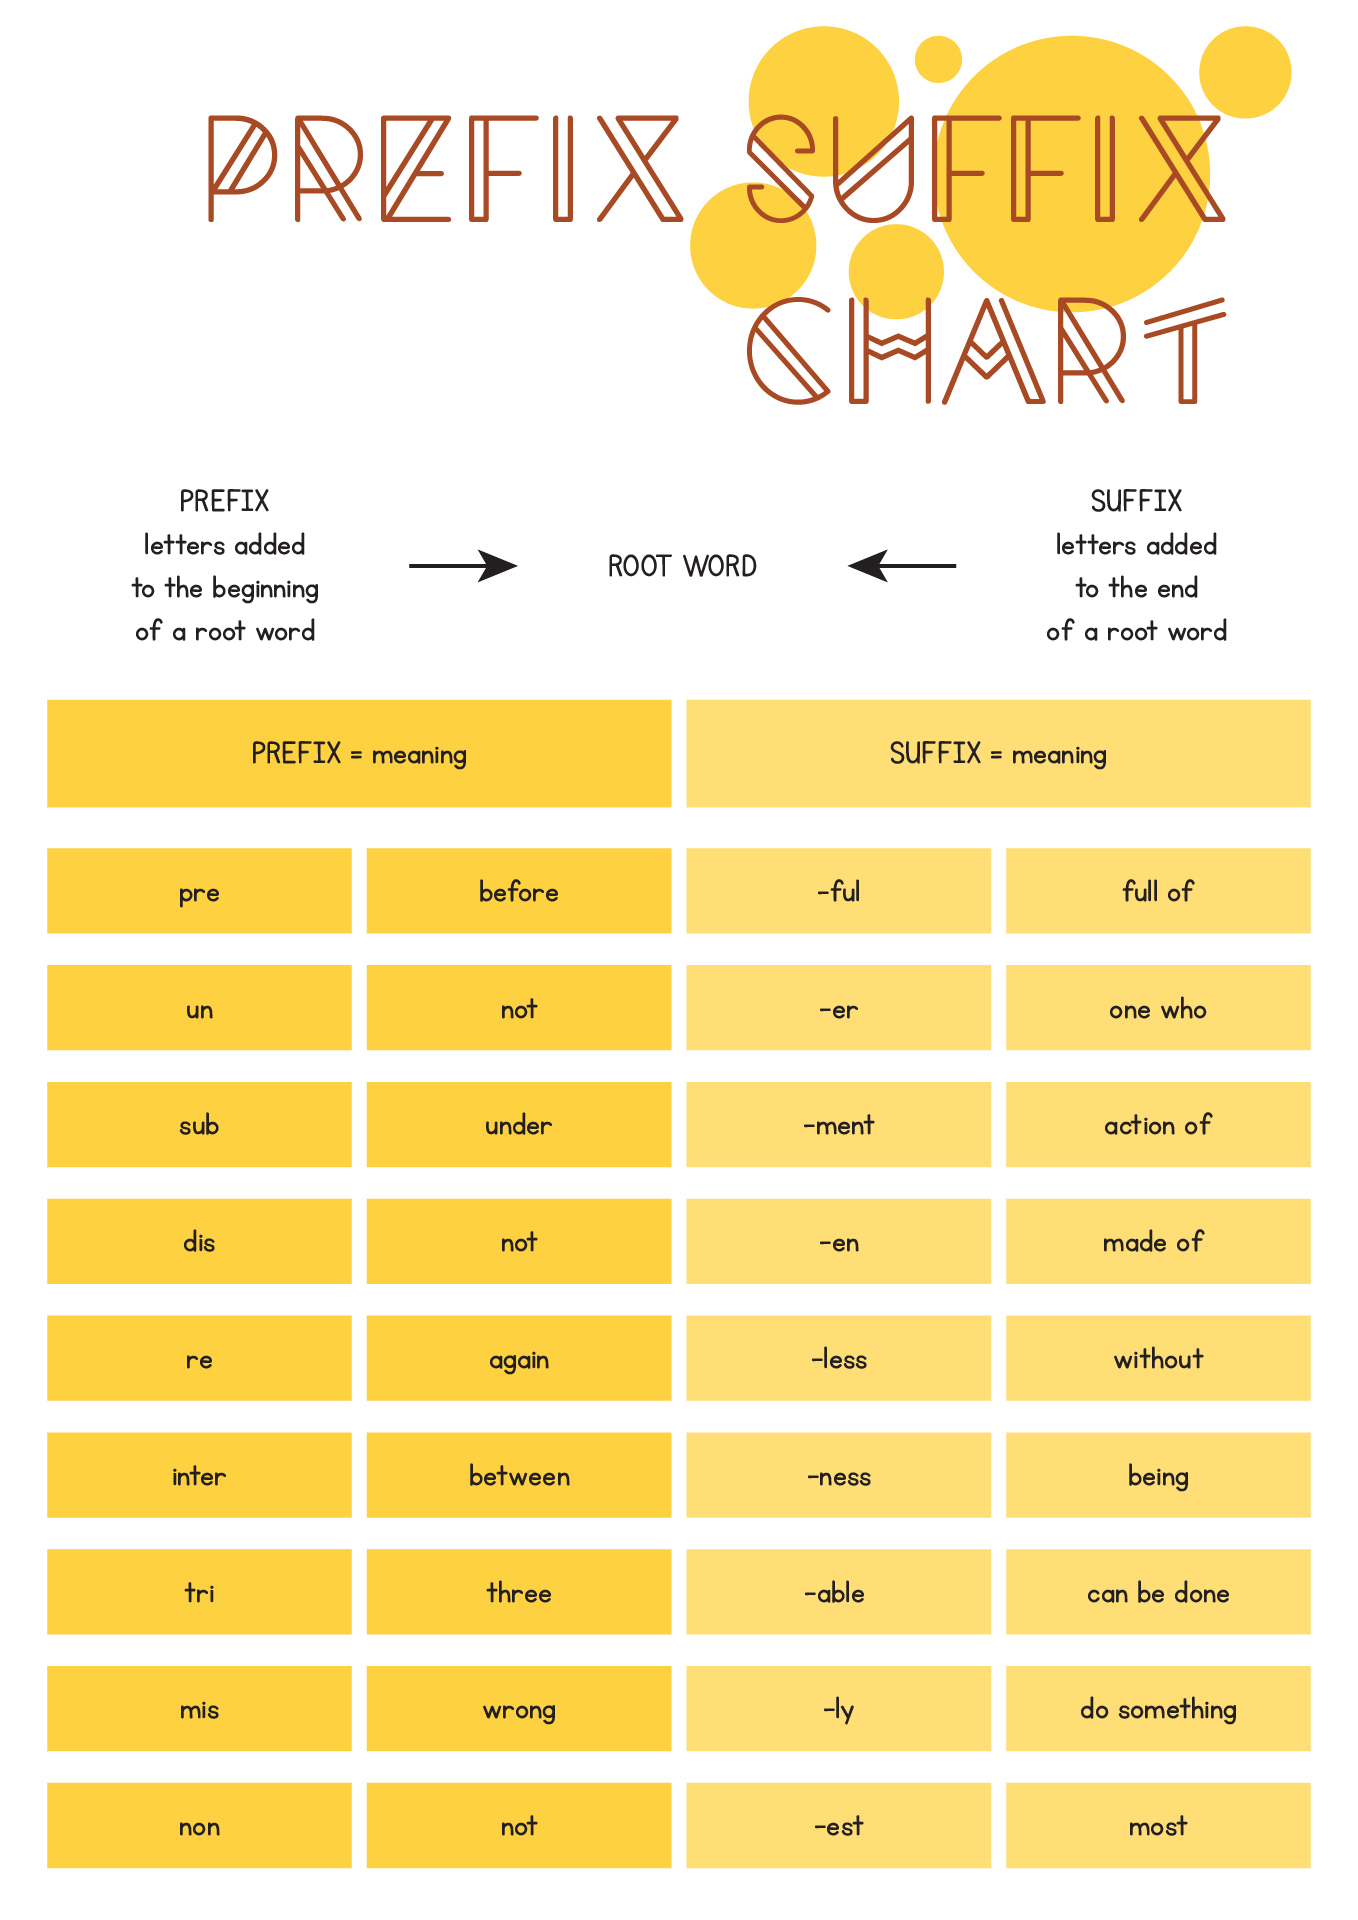 Prefixes and Suffixes Charts